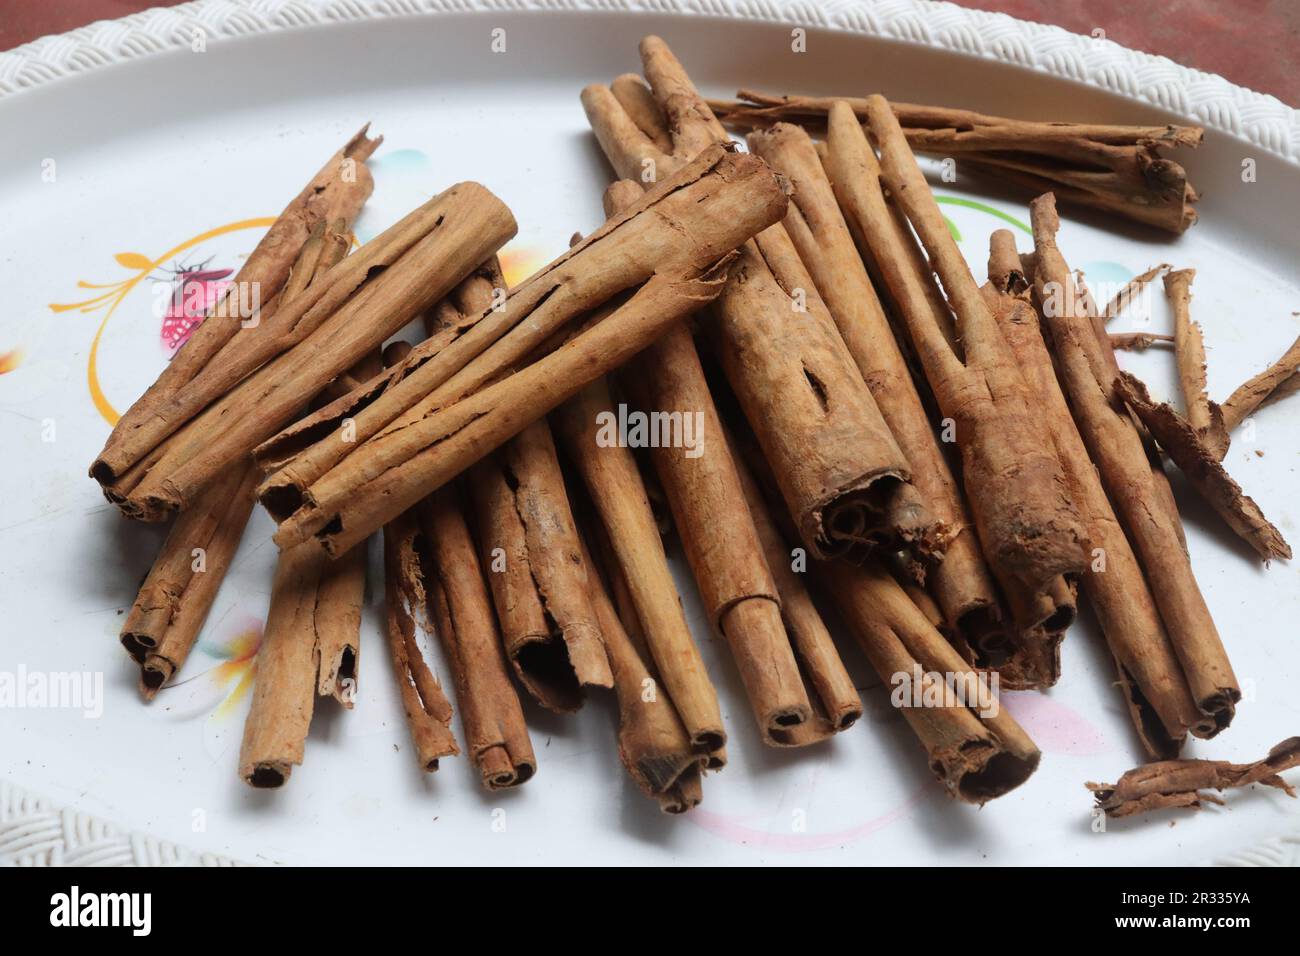 world famous sri lankan cinnamon.cinnamon is a species of tree belonging to the genus cinnamomum.cinnamon is a type of spice.cinnamon is mainly used t Stock Photo